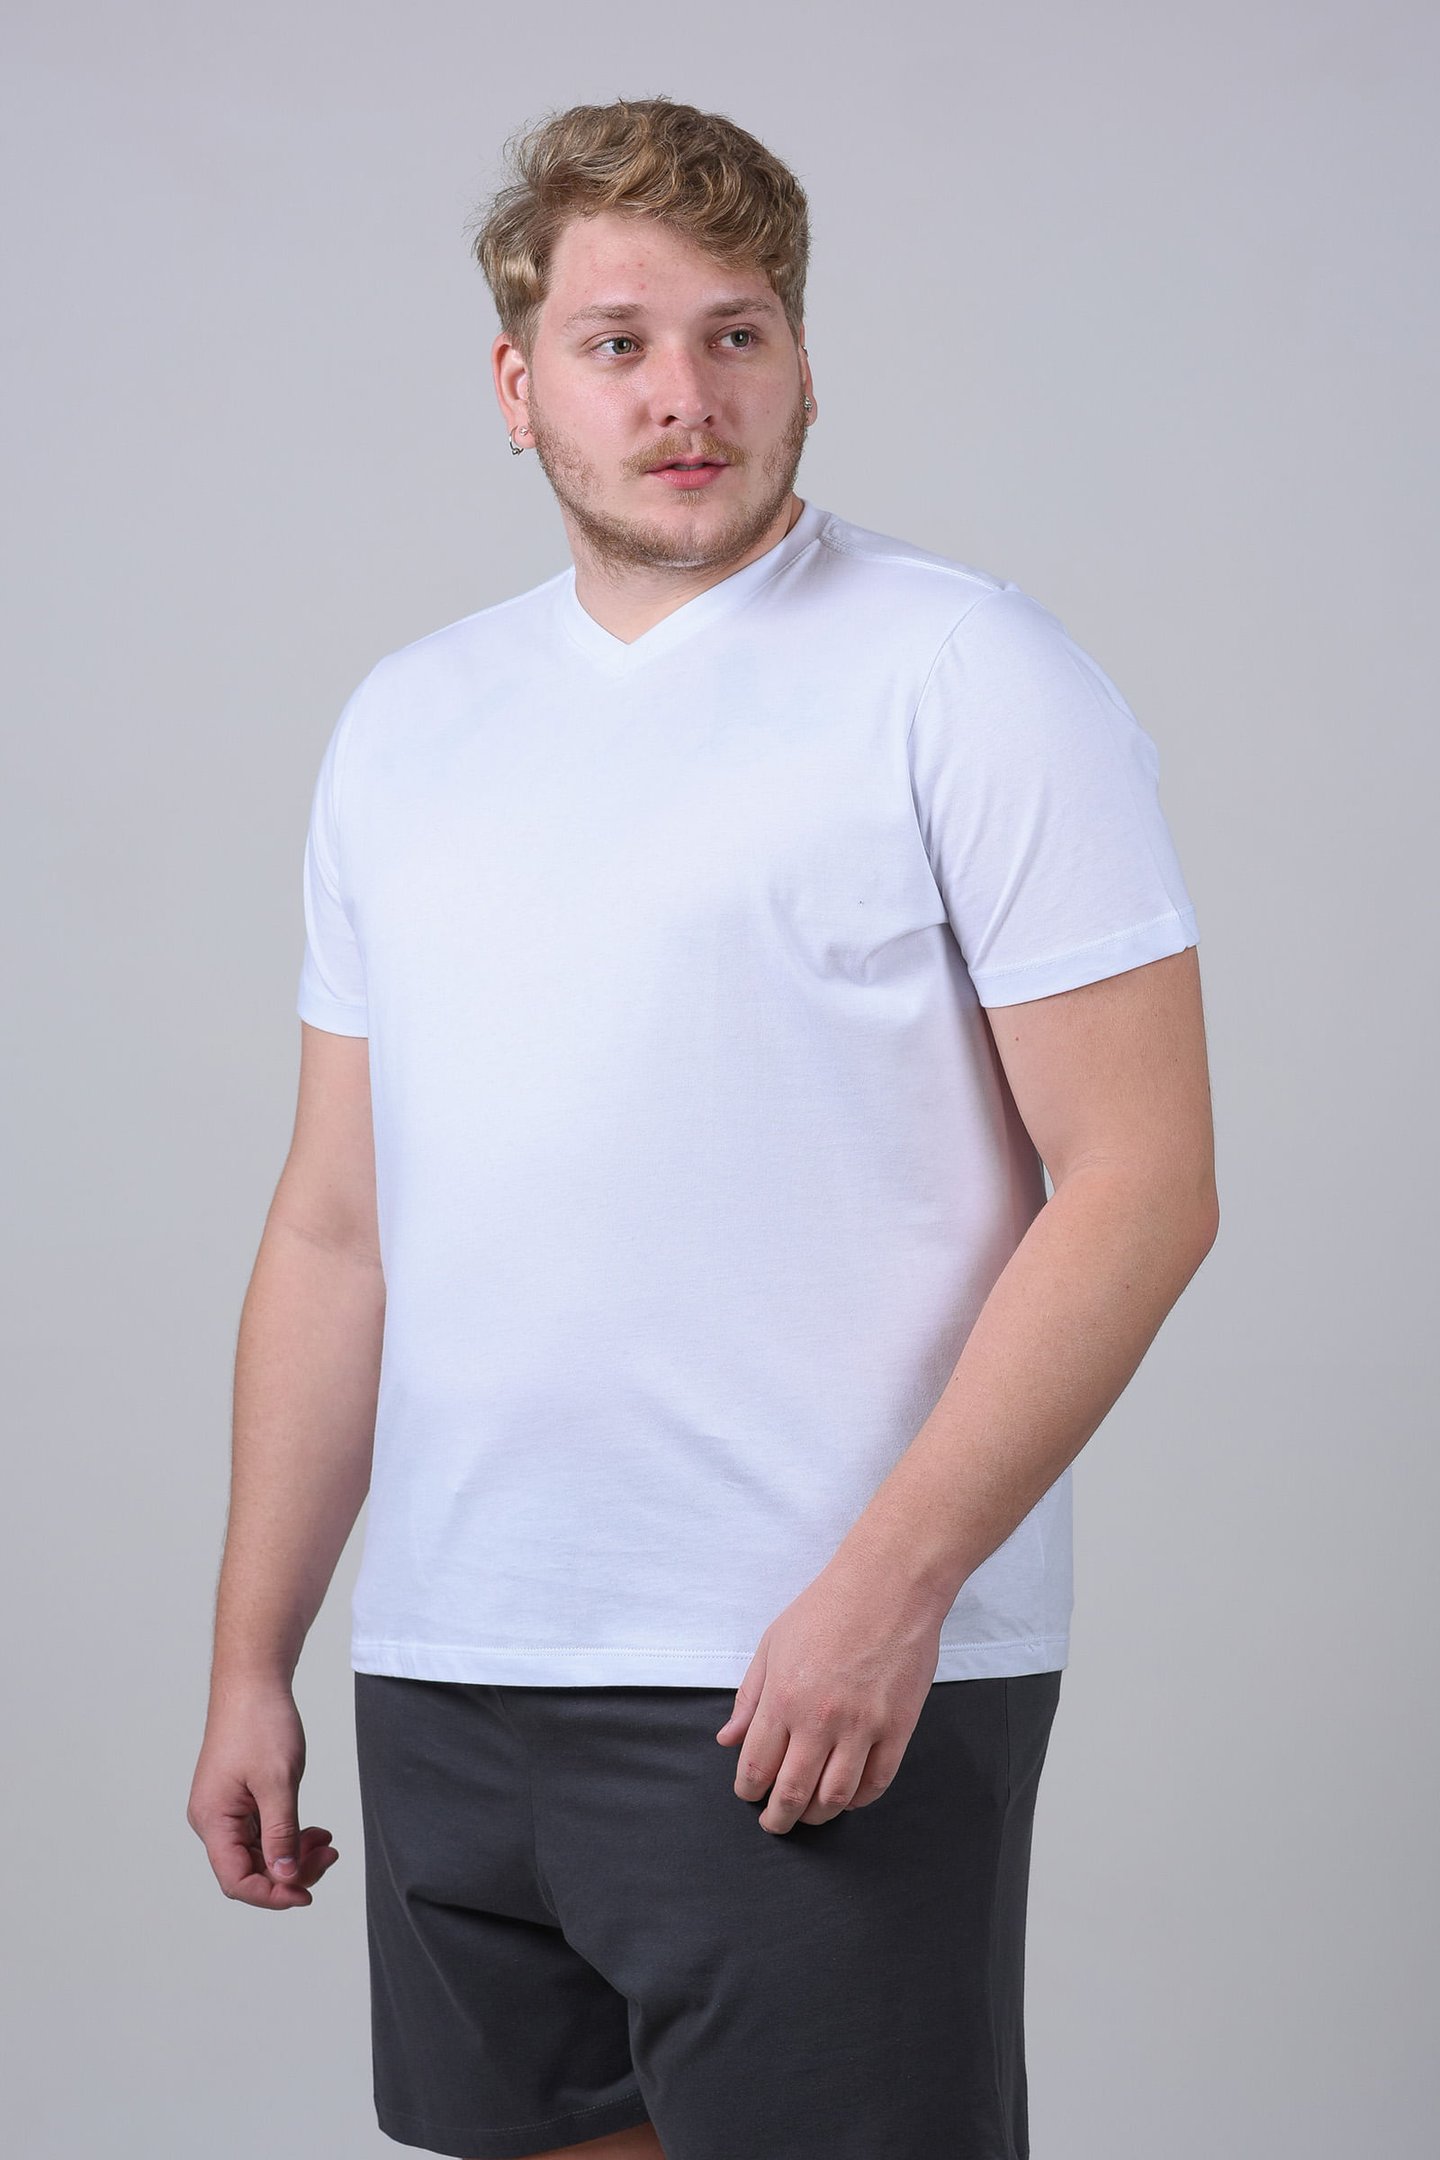 Camiseta decote v plus size branco